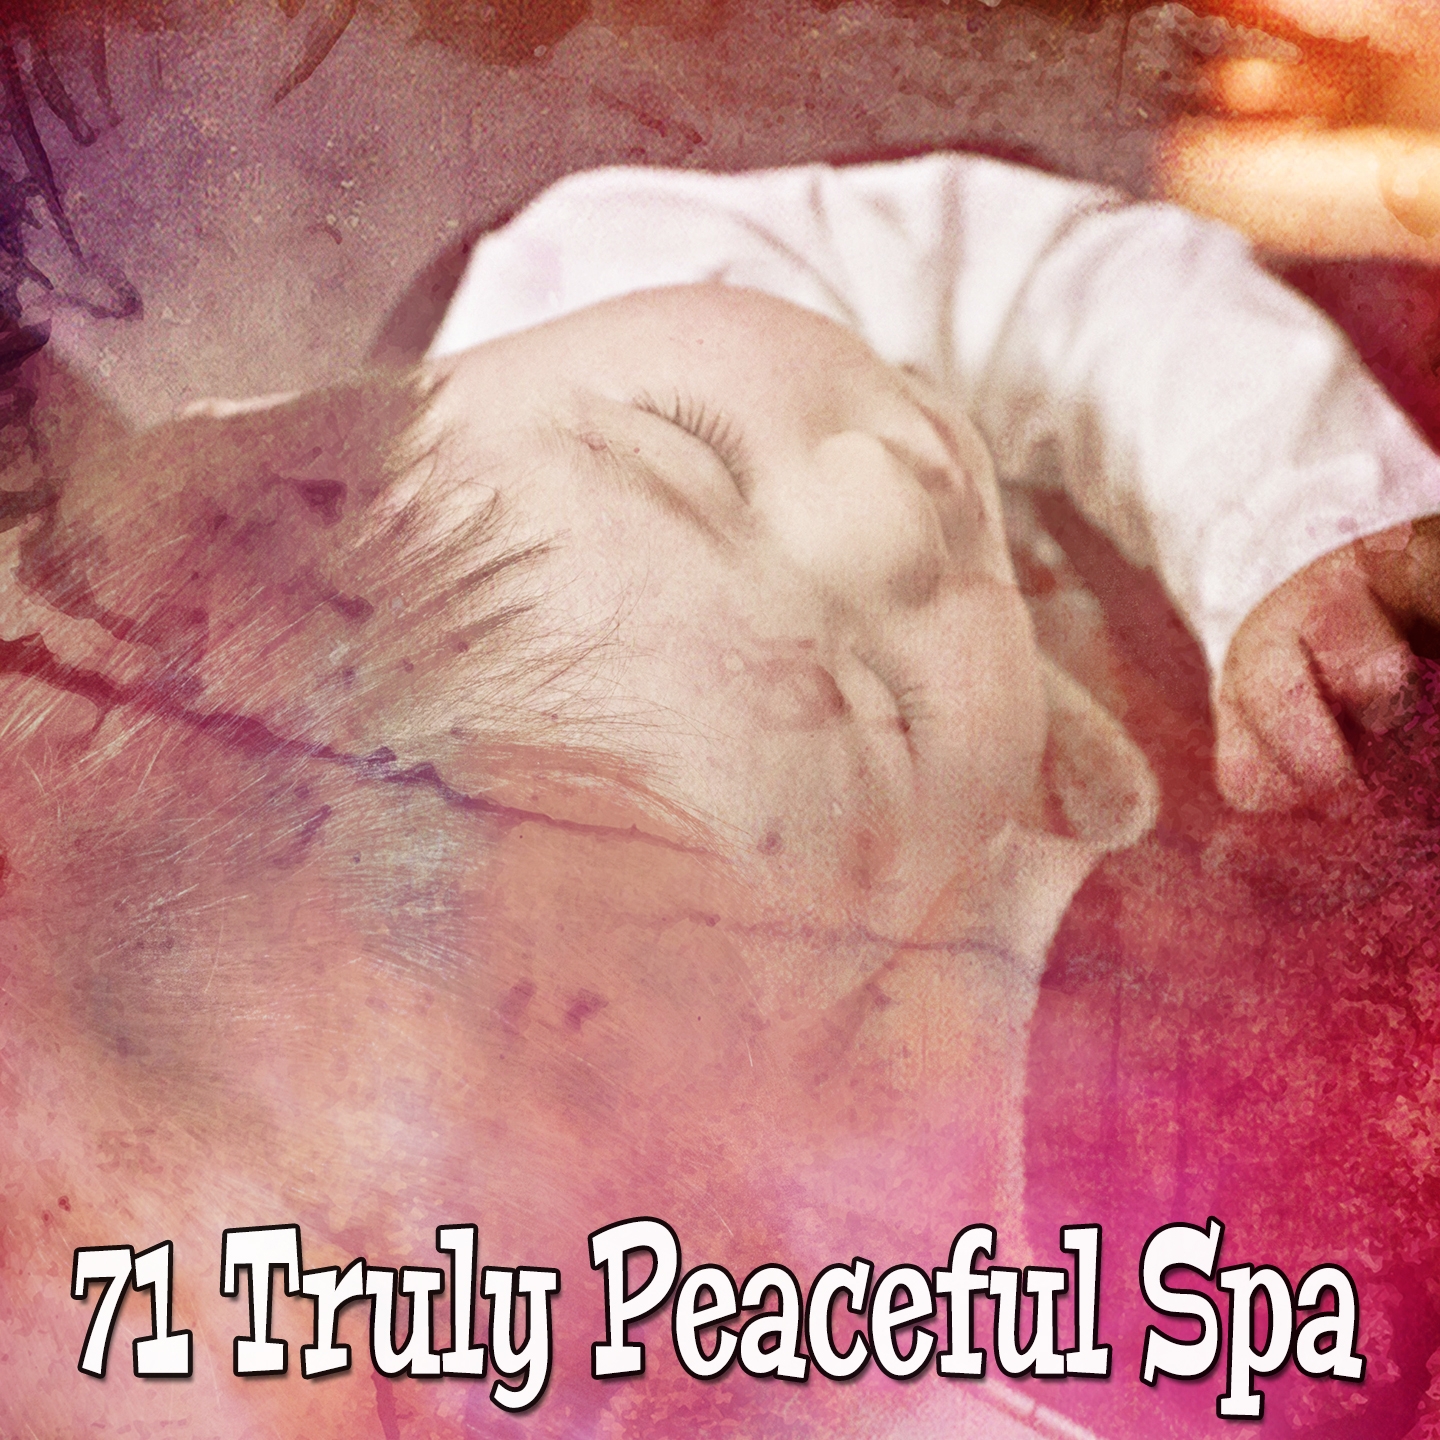 71 Truly Peaceful Spa